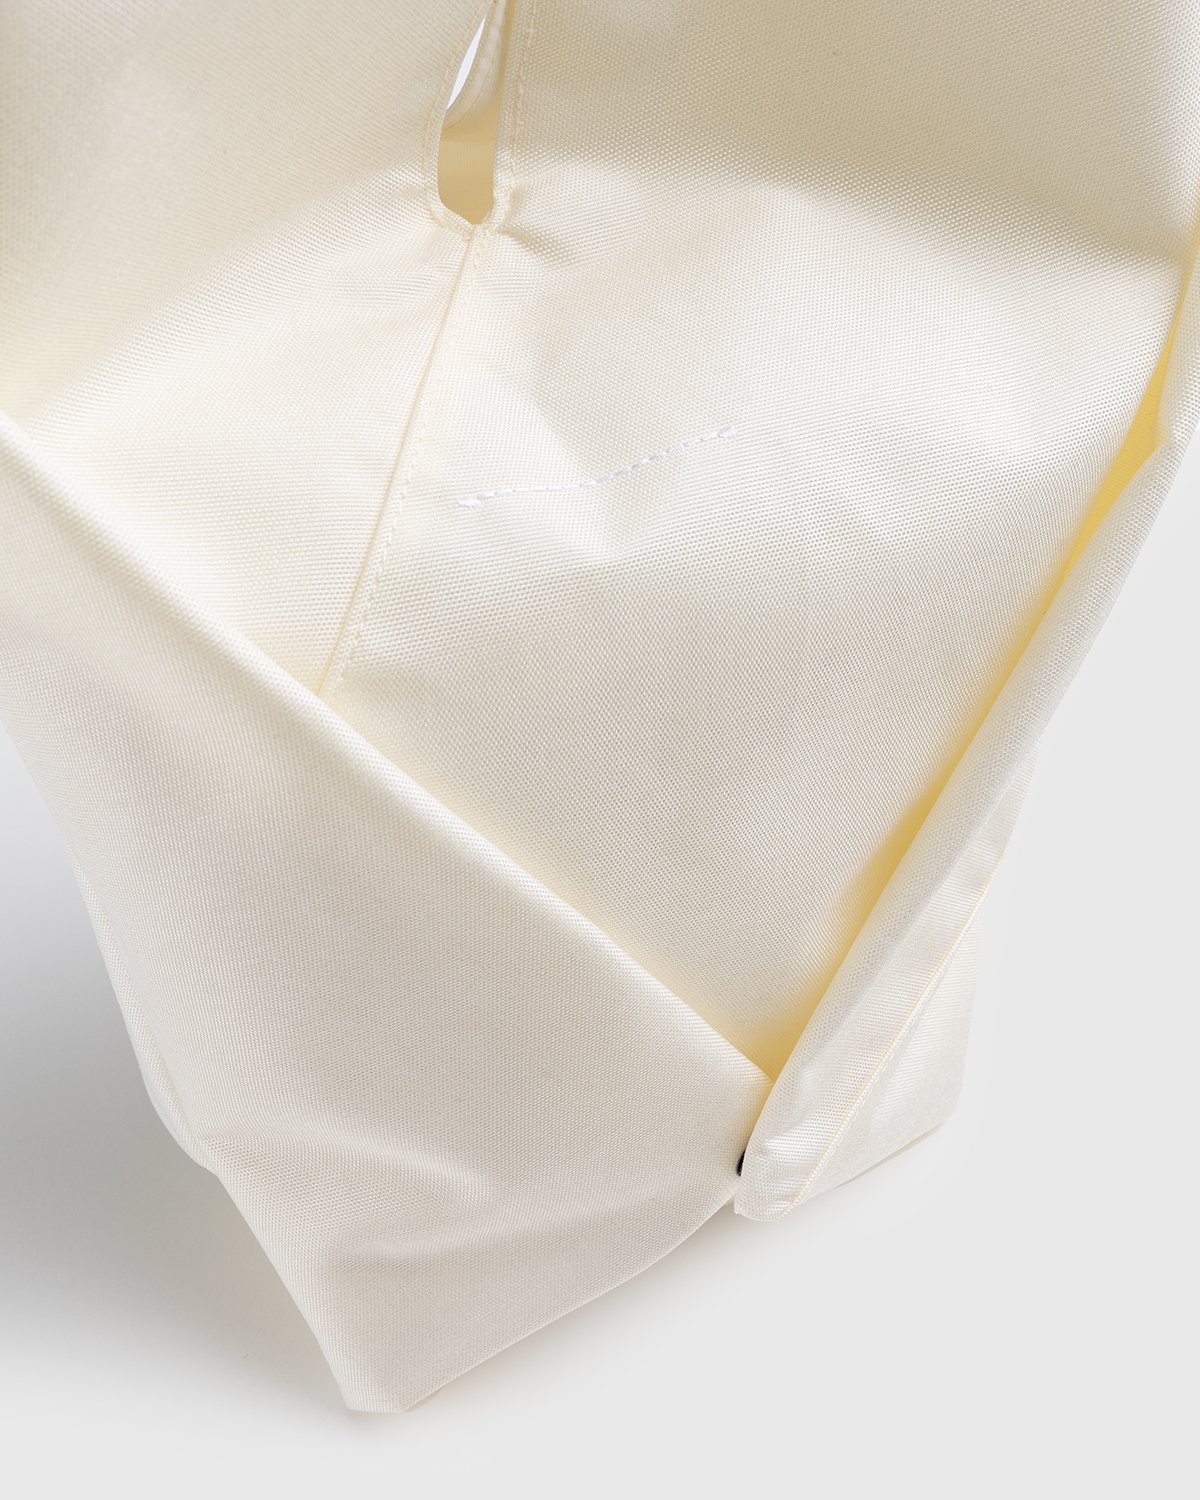 MM6 Maison Margiela x Eastpak - Borsa Shopping Bag White - Accessories - White - Image 5